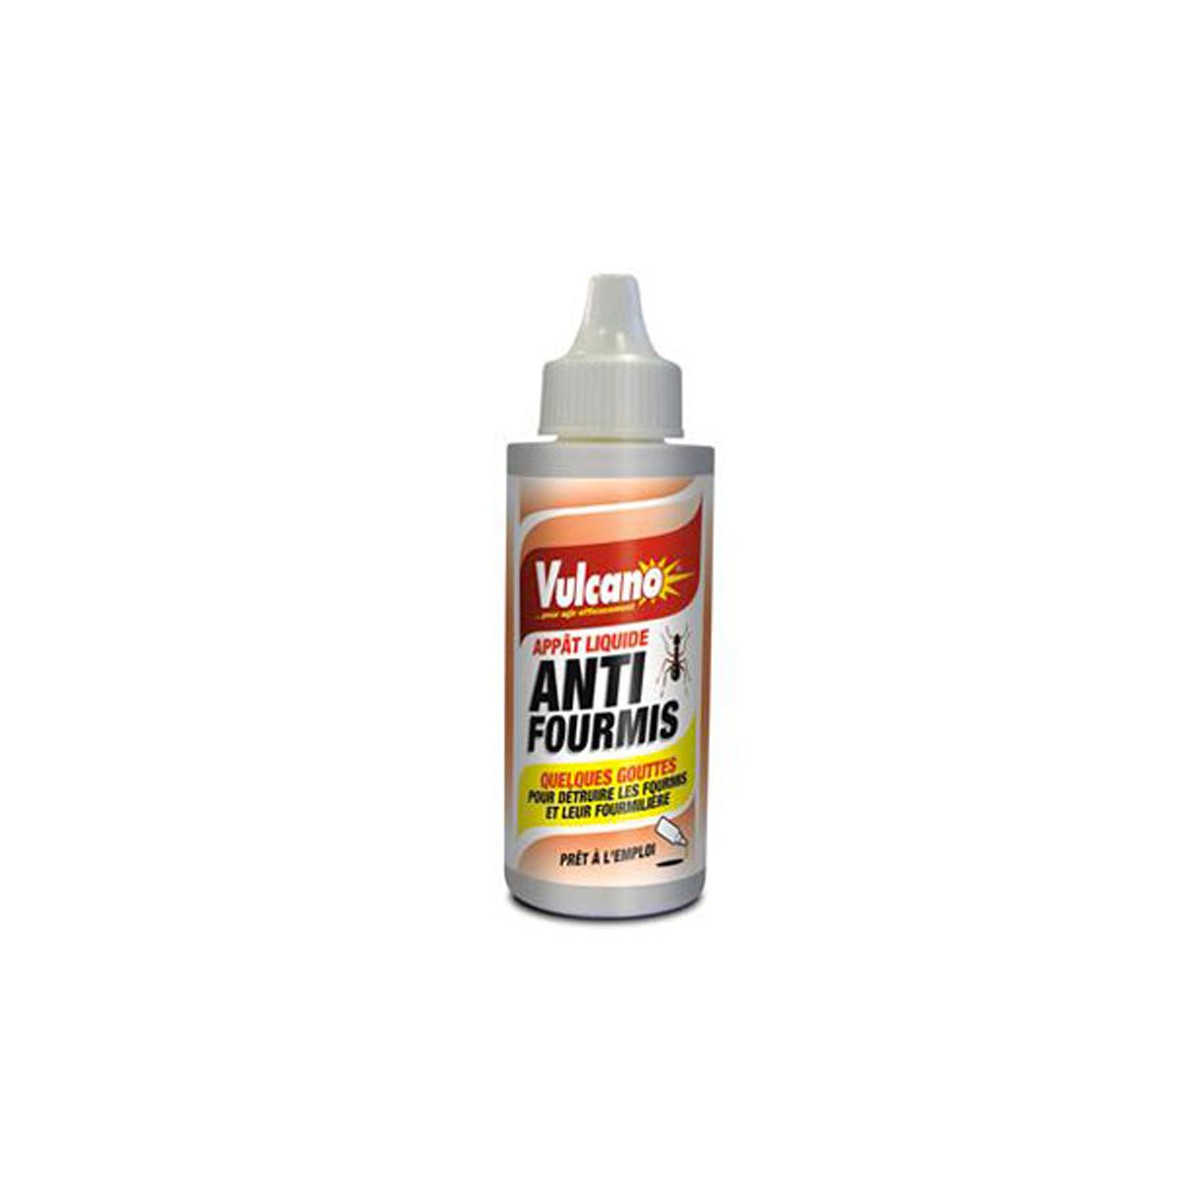 Gel Anti-fourmis - fourmis et fourmilière - 50 ml - ABATOUT